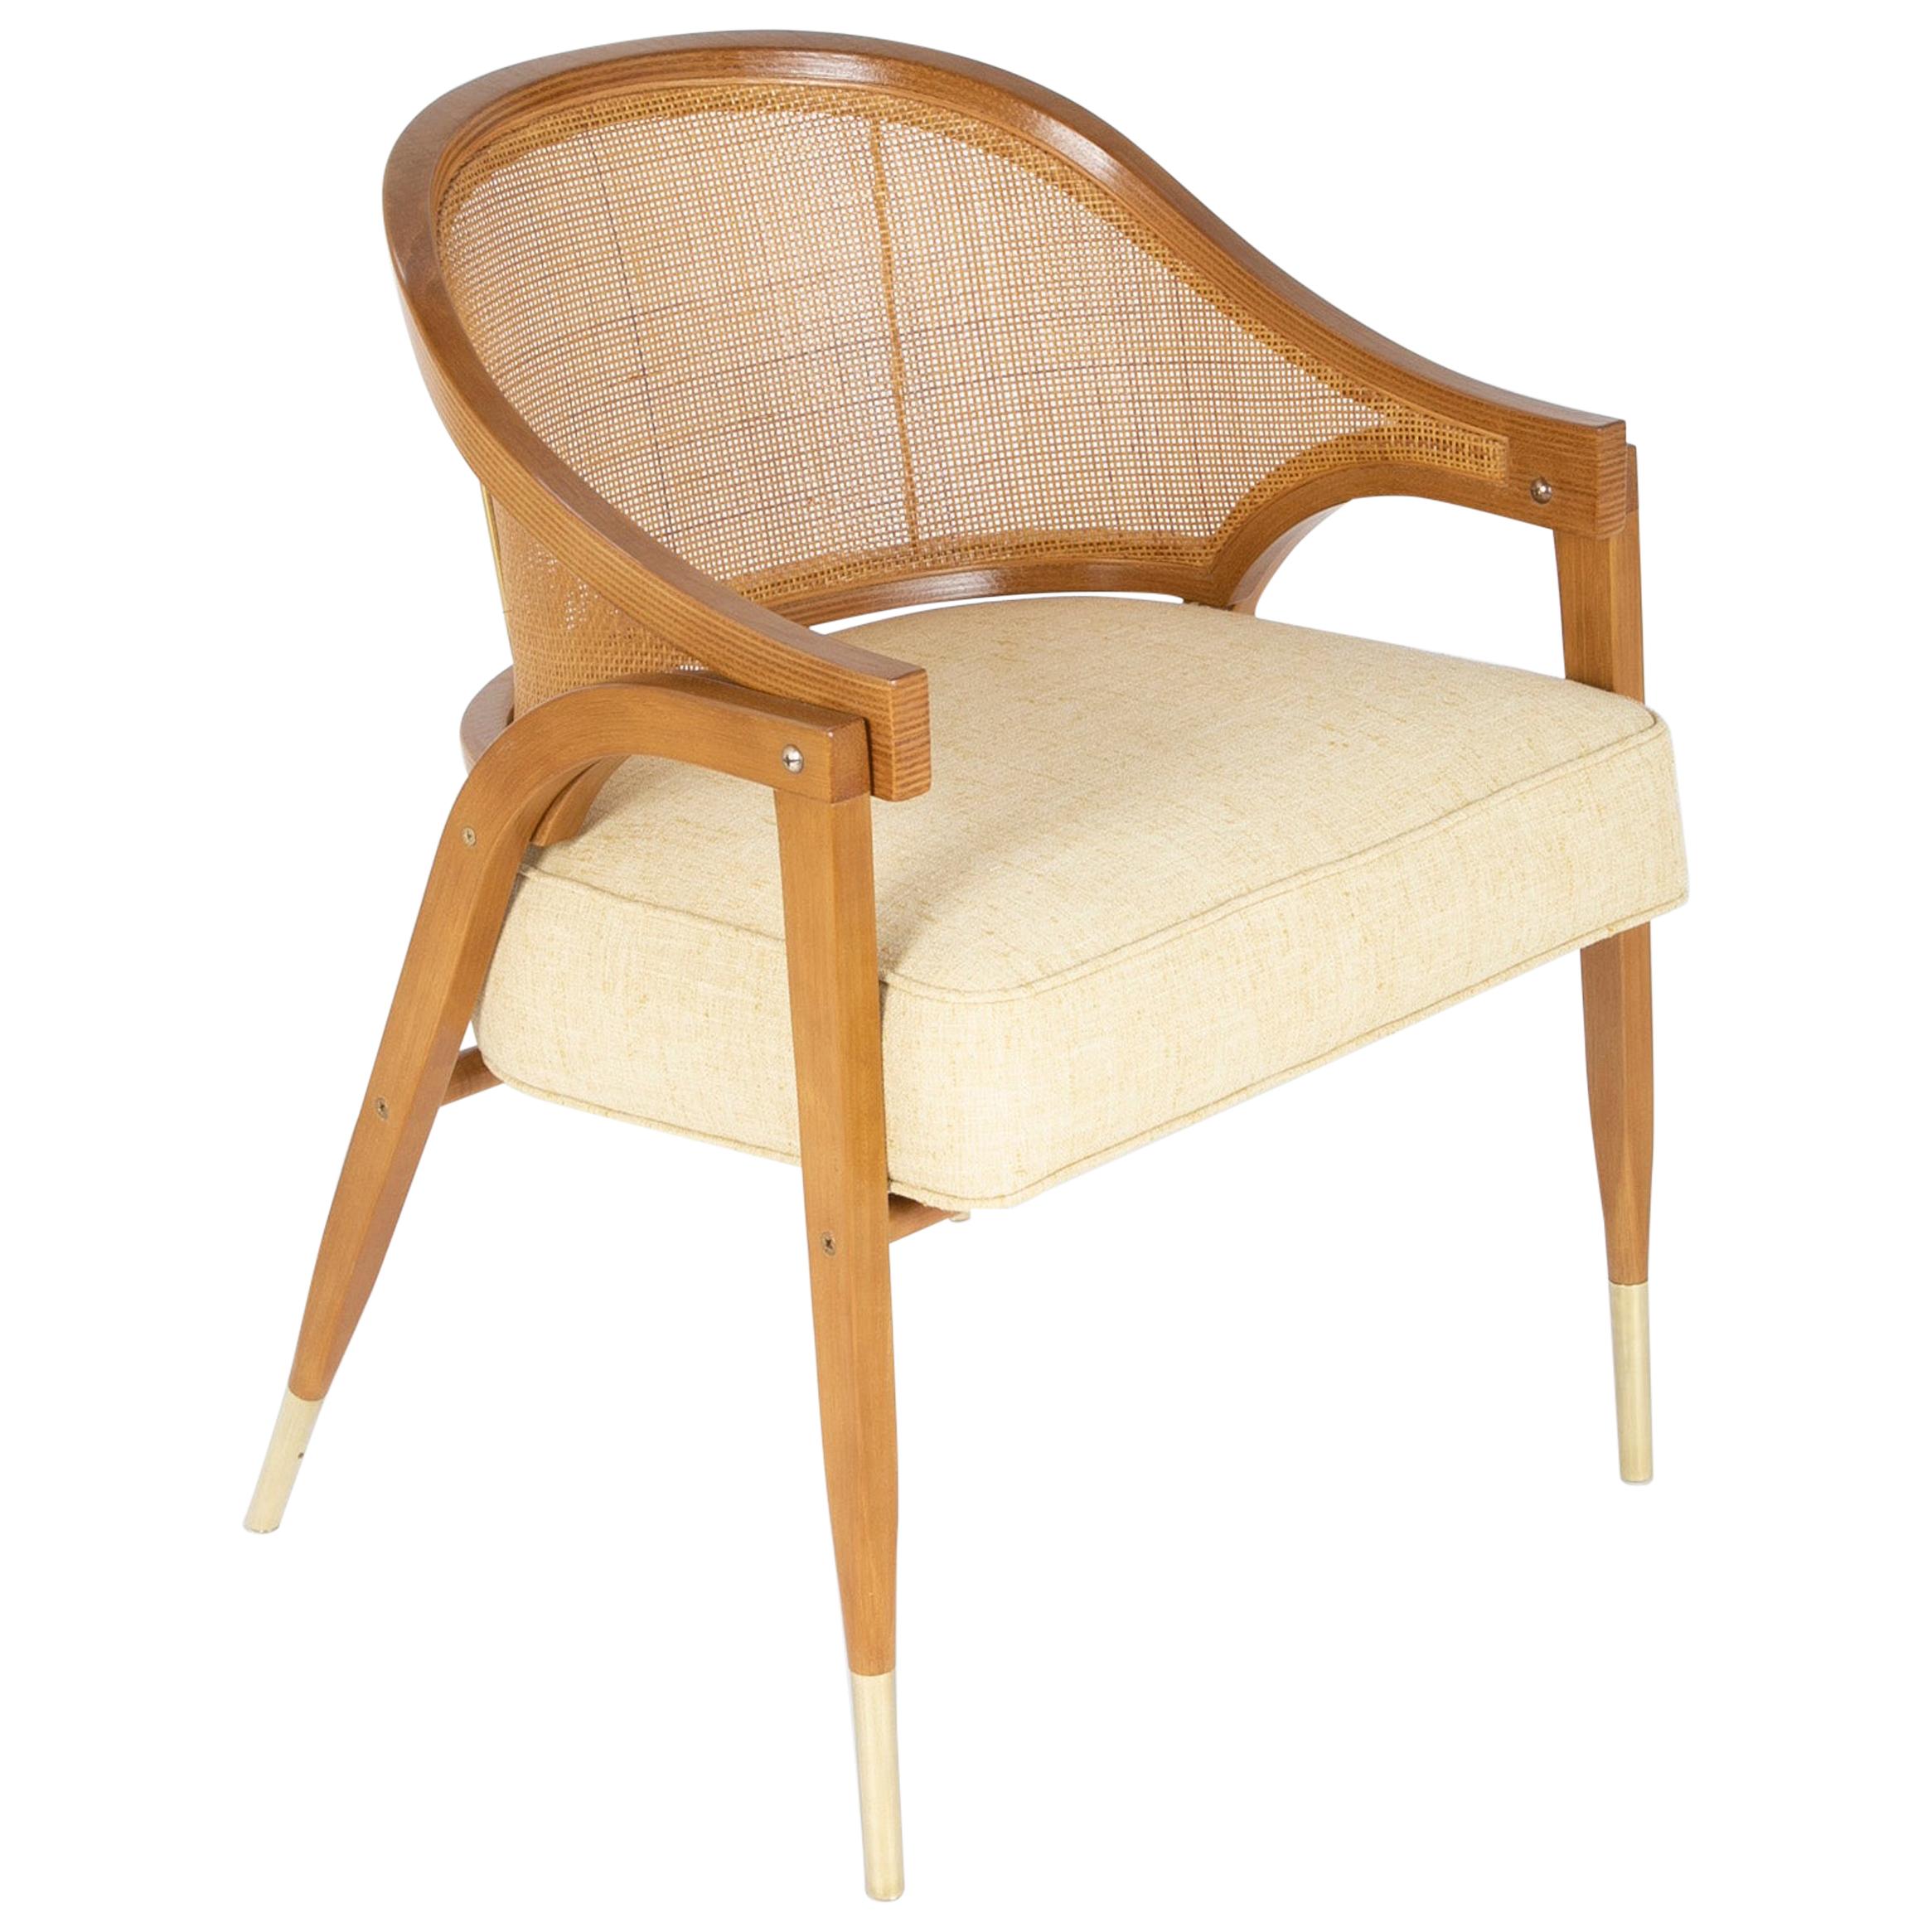 "A Frame" Caned Back Armchair Designed by Edward Wormley for Dunbar